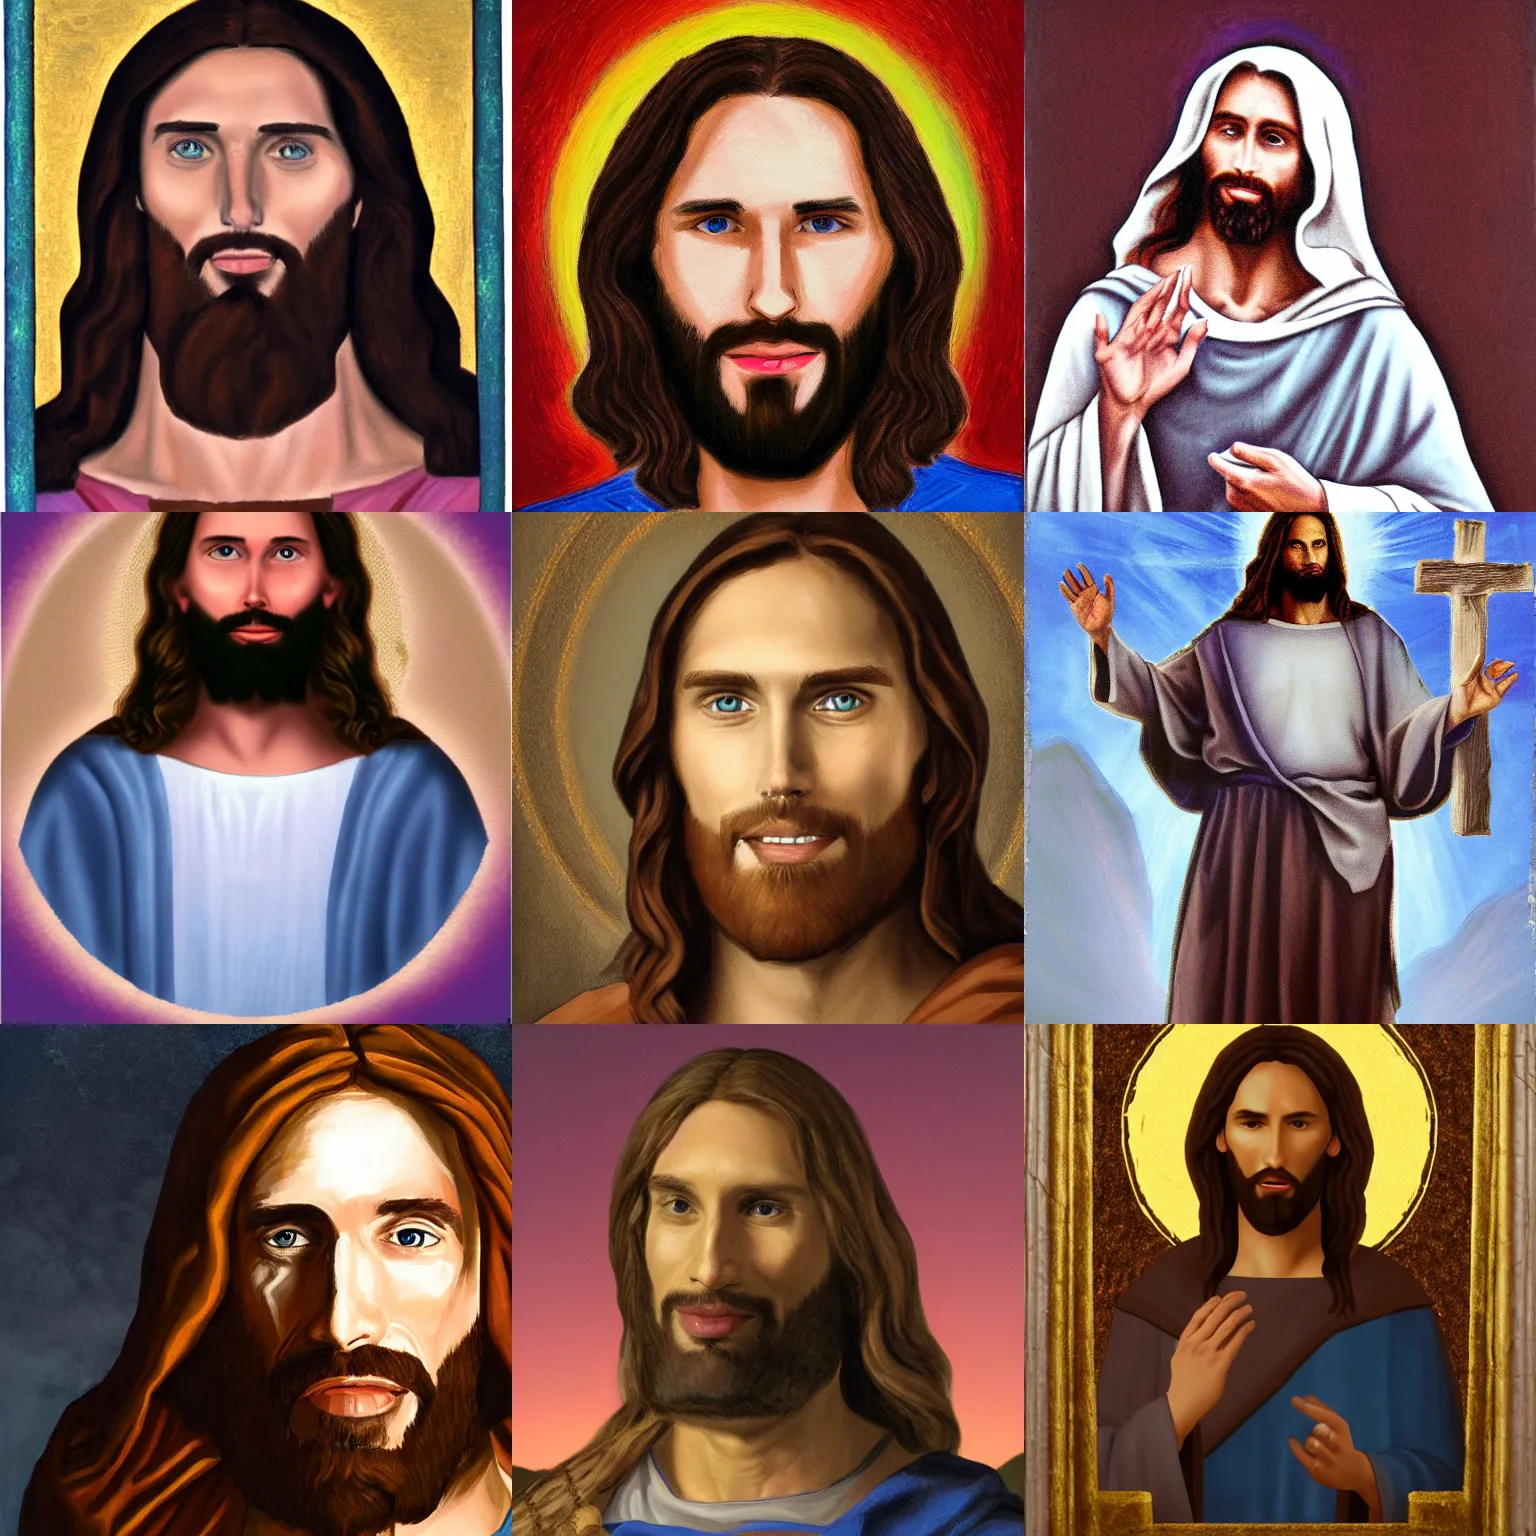 Prompt: portrait of jerma985 as jesus christ